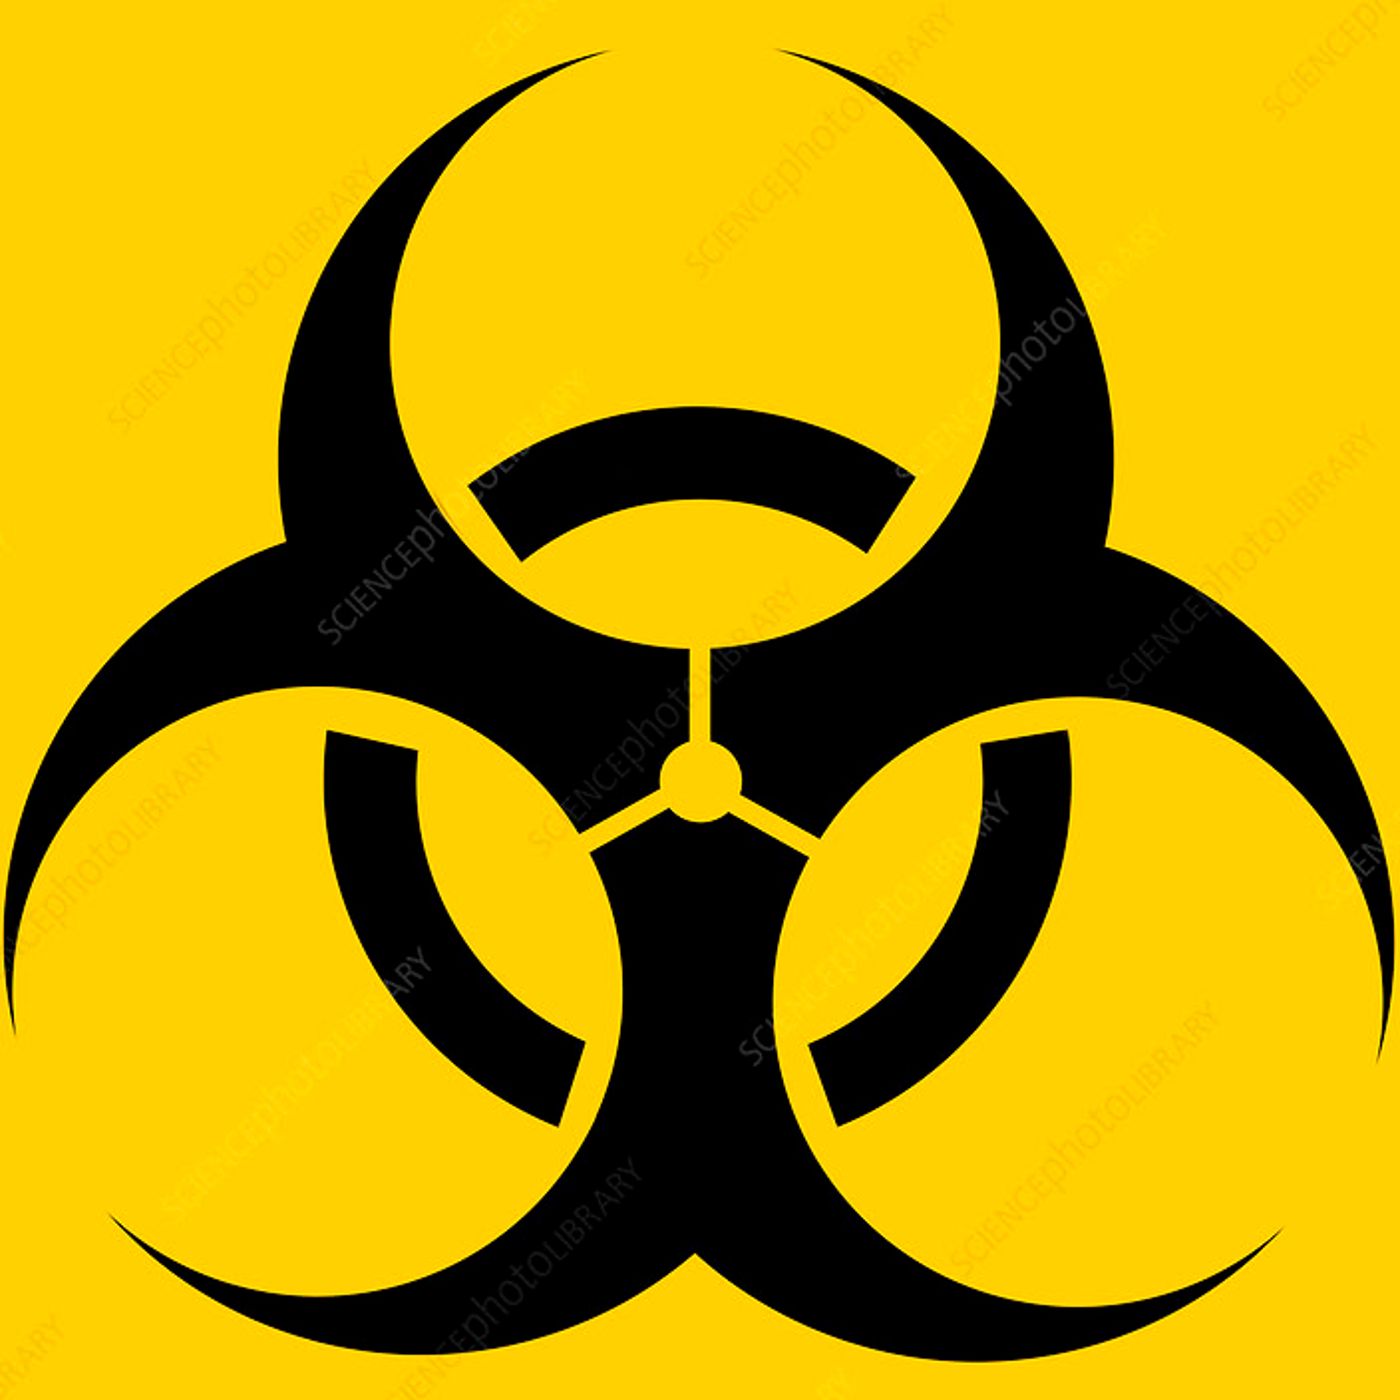 Episode 4 - Quarantine - A Necessary Precaution for All Keepers